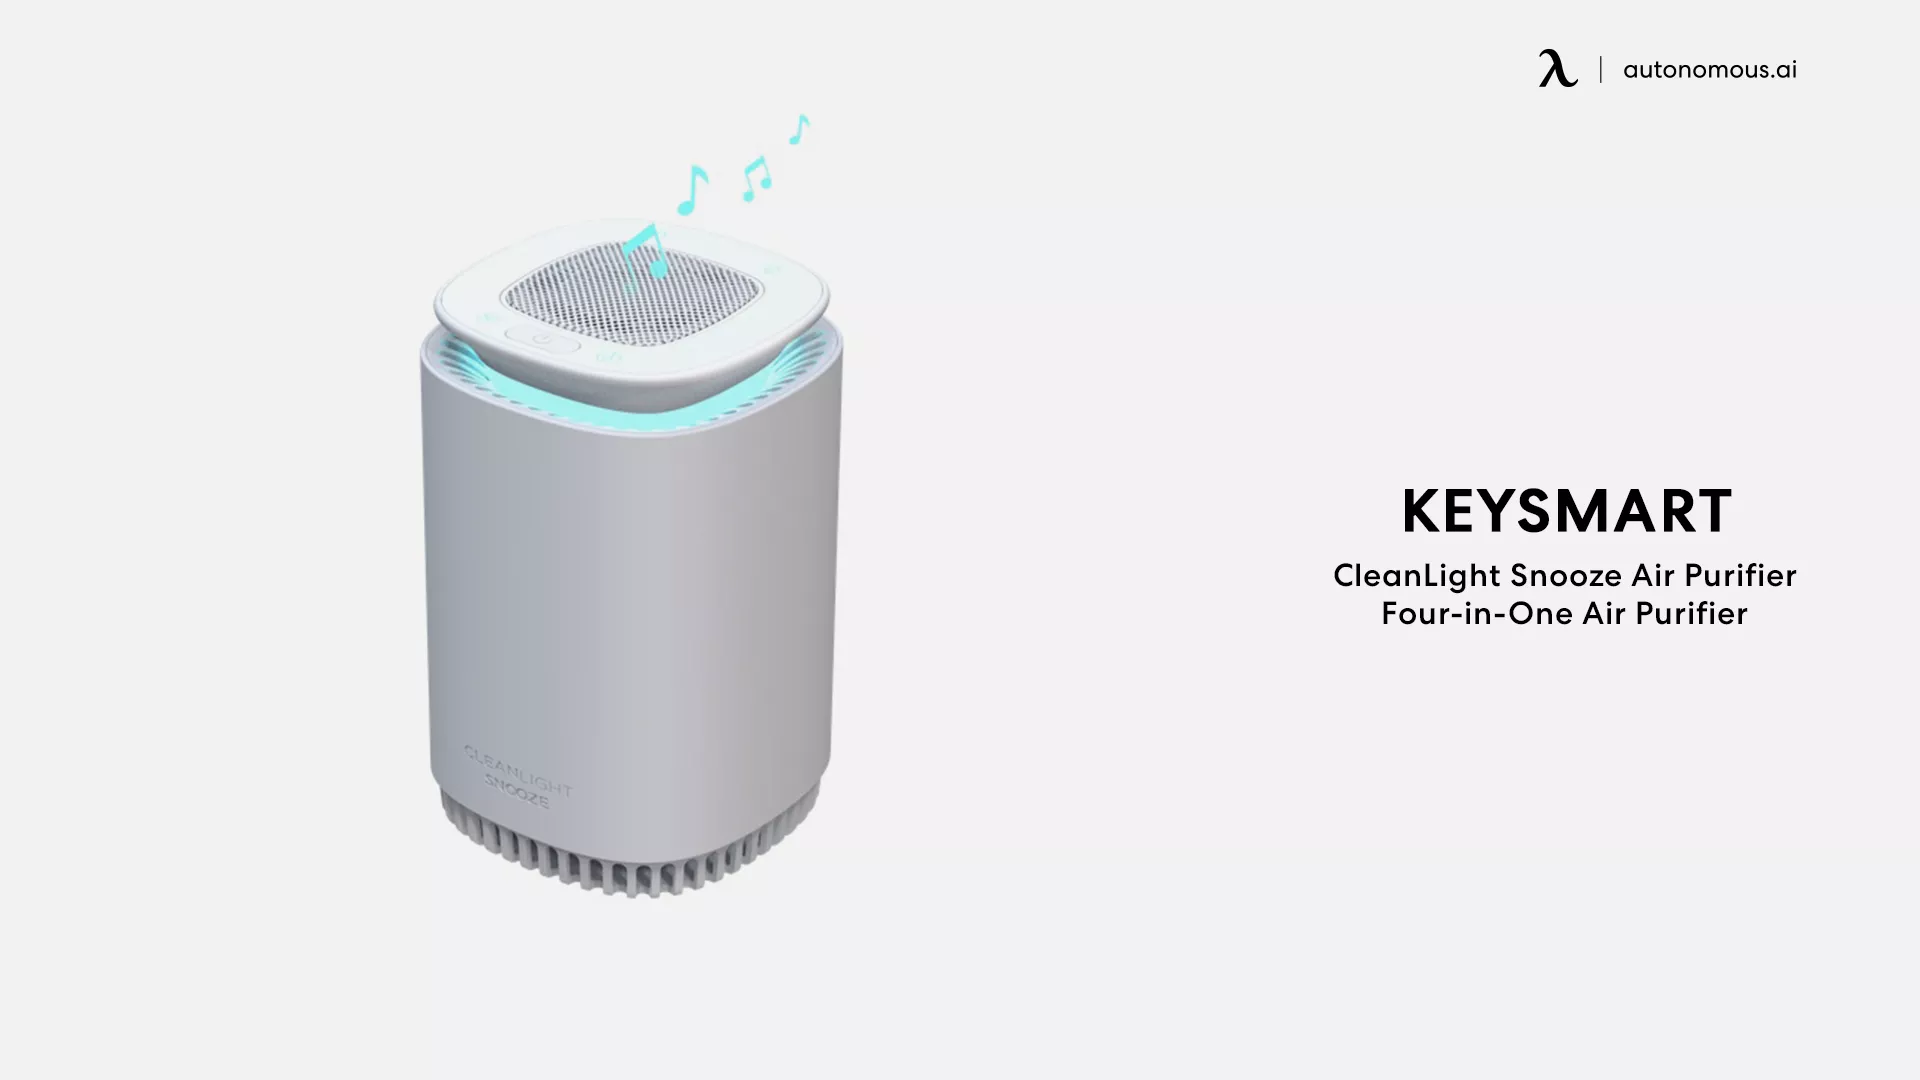 KeySmart Air Purifier - Black Friday air purifier